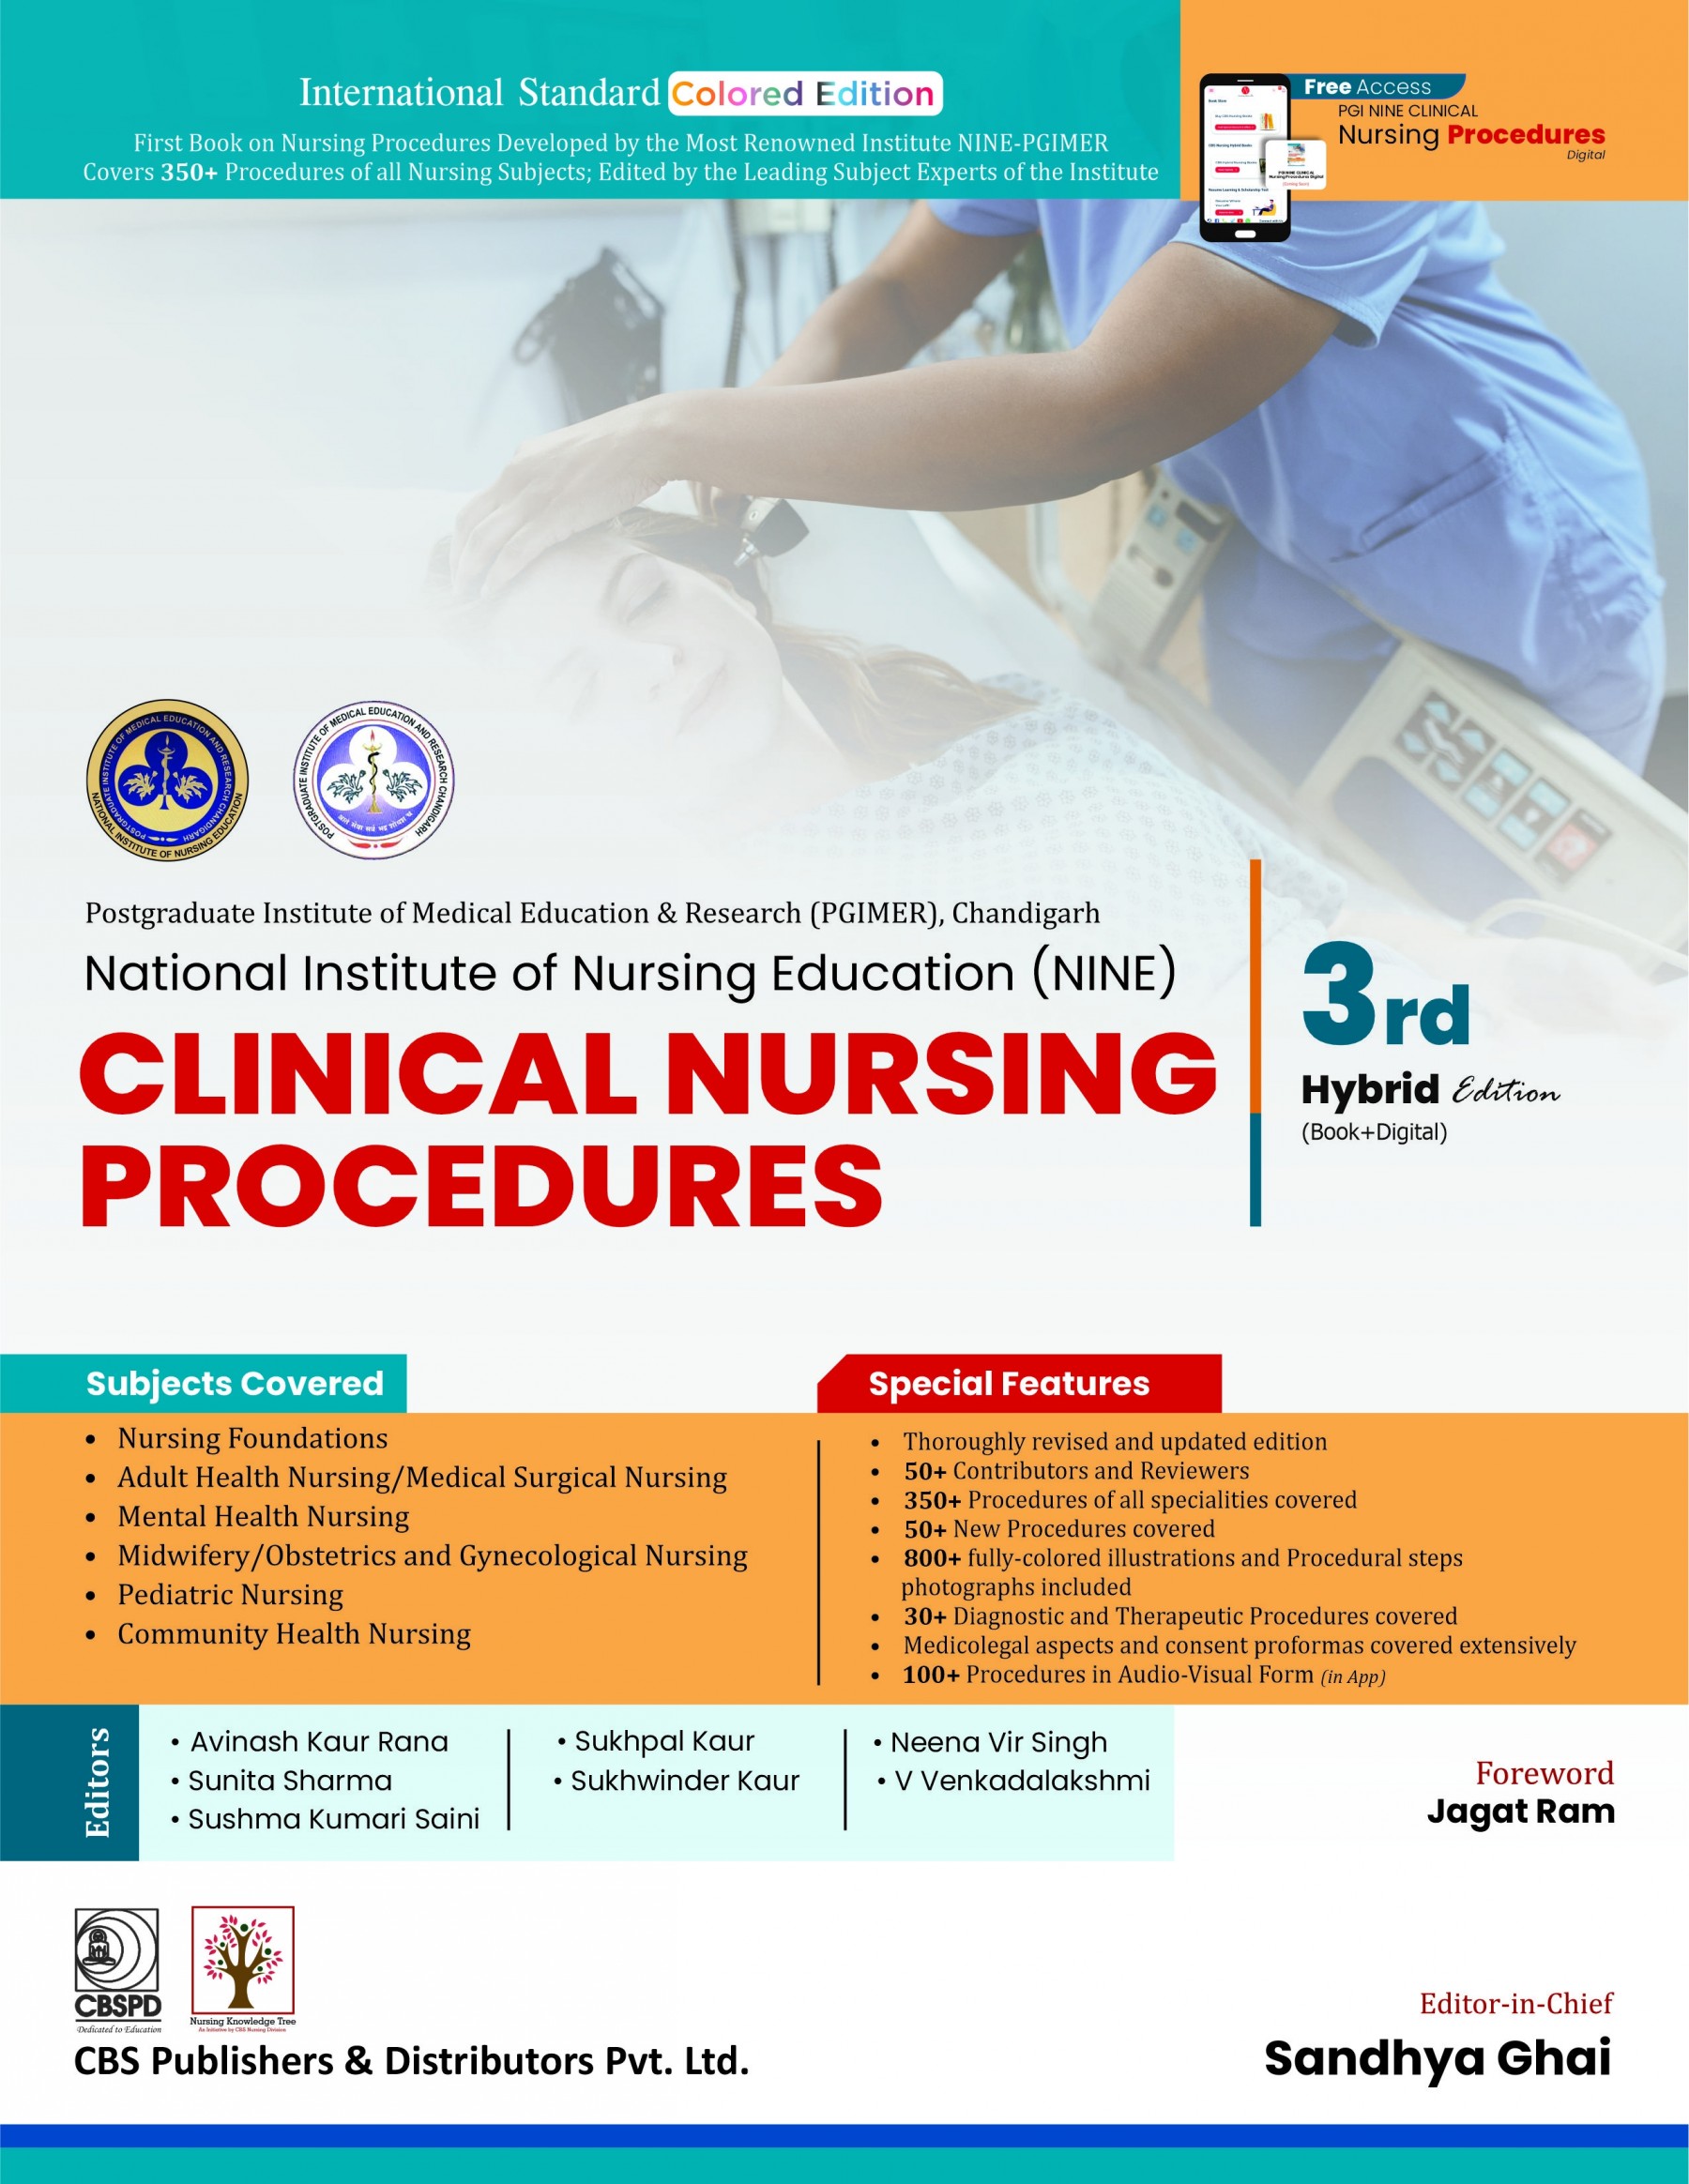 Buy online Latest New Edition of PGI NINE Clinical Nursing Procedures | CBS Publication